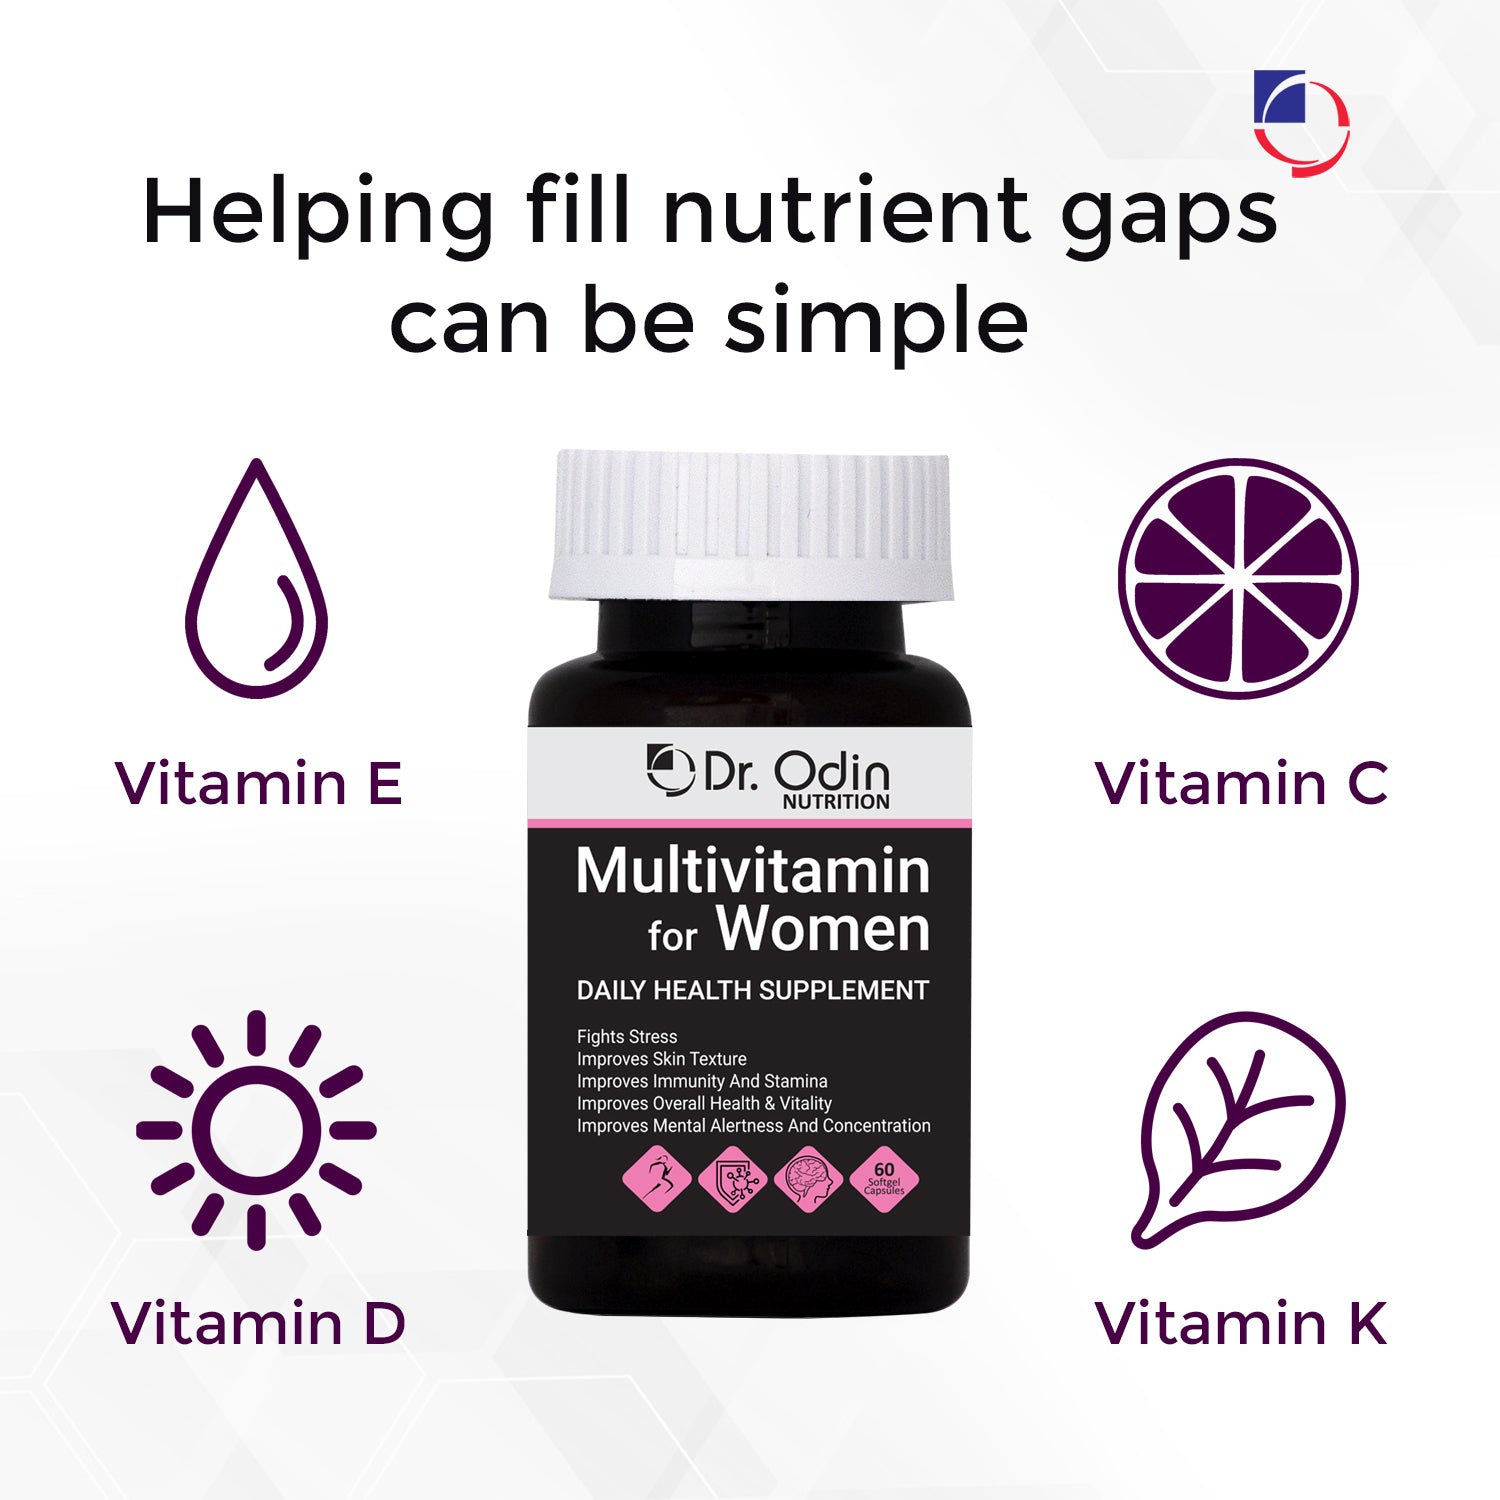 Women's Multivitamins  Supplements for Women's Health & Wellness